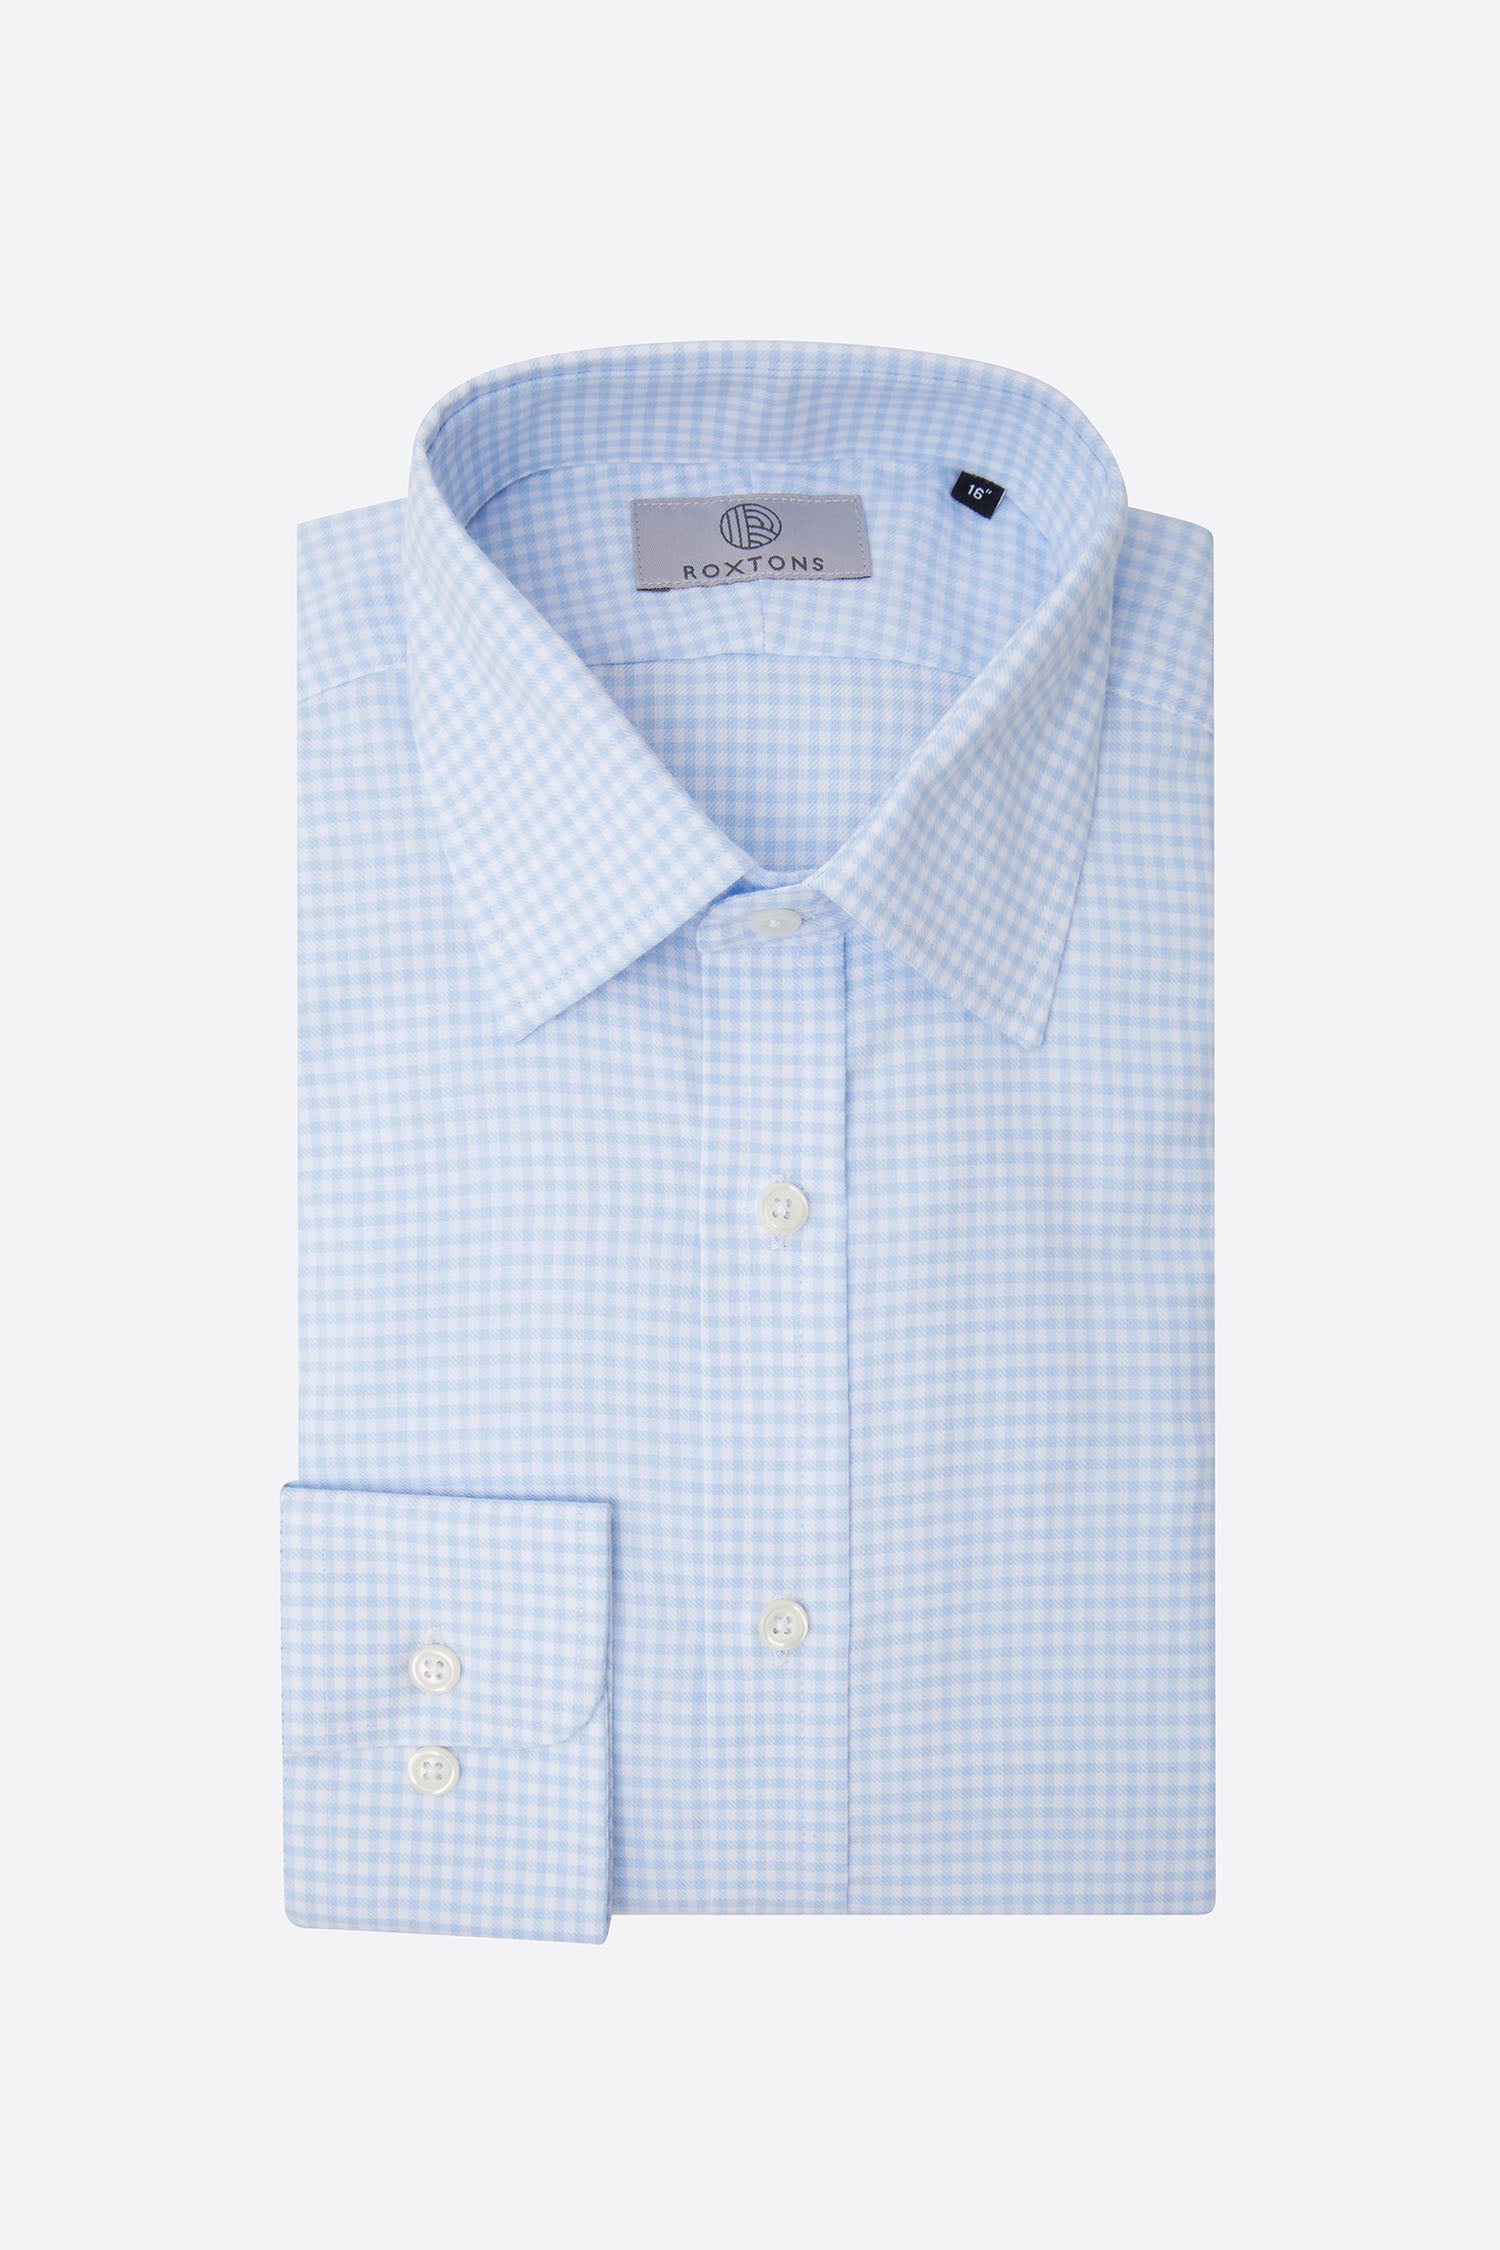 Roxtons - Small Check Shirt